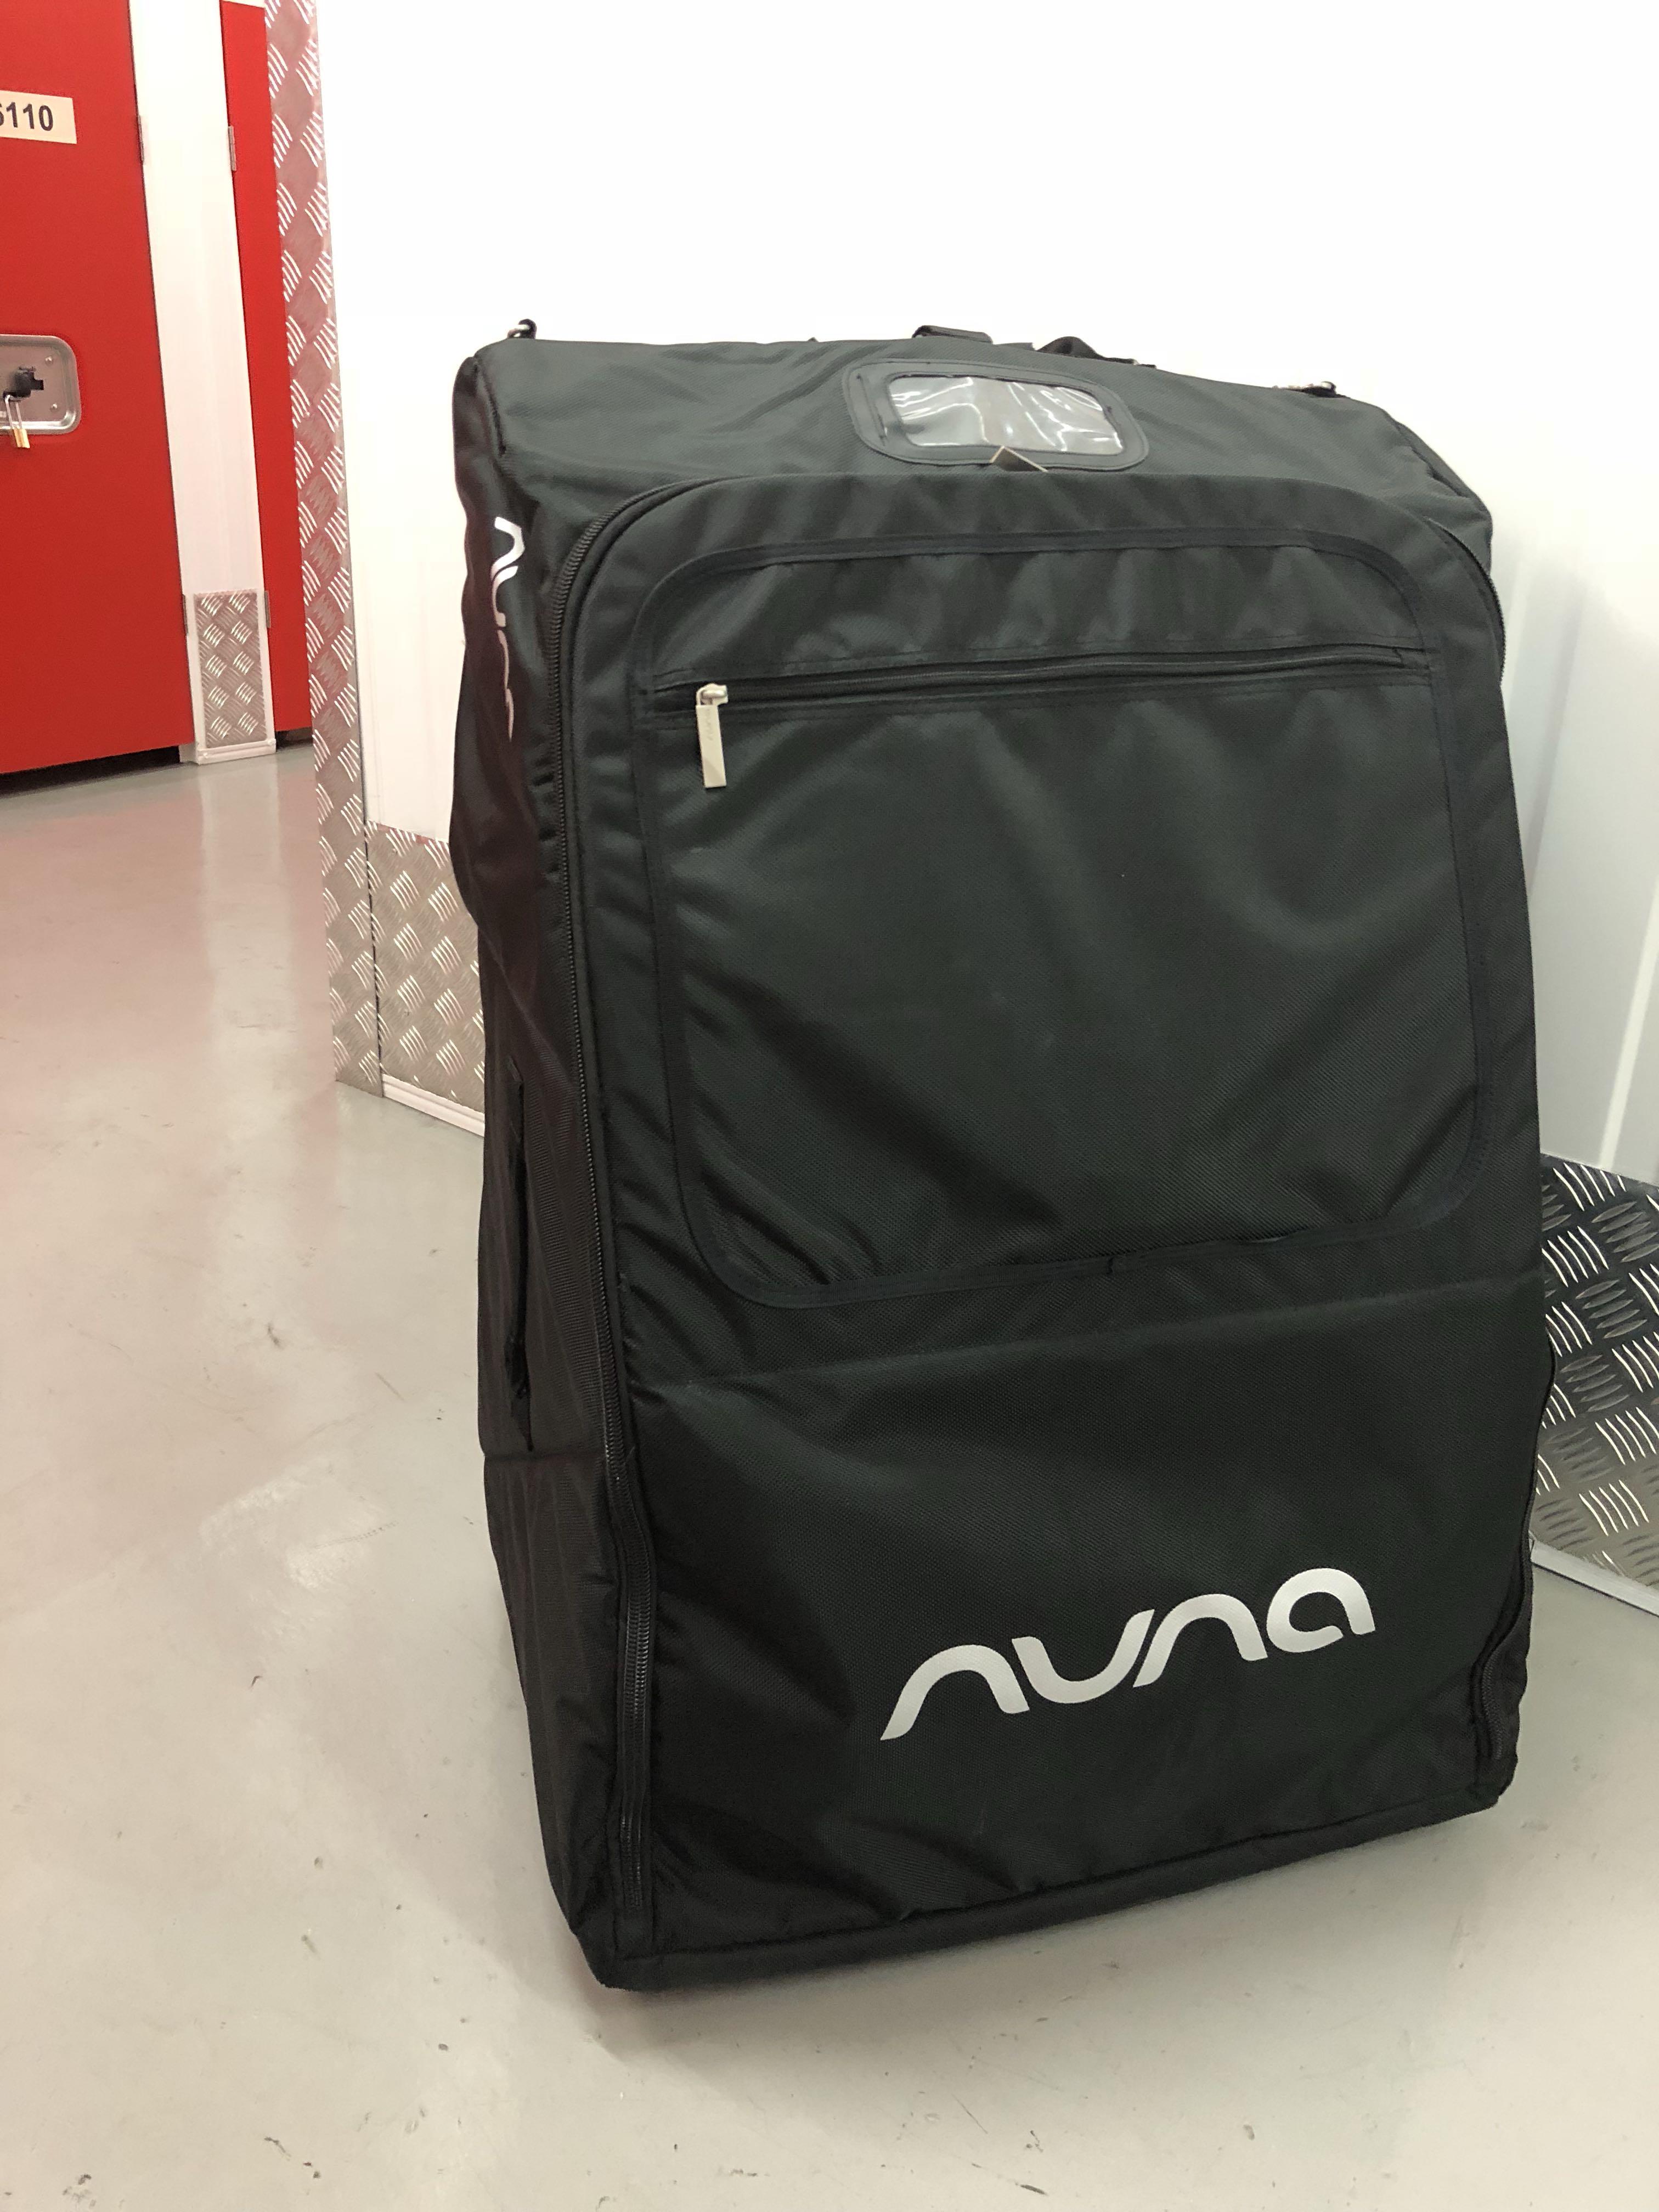 nuna mixx2 travel bag